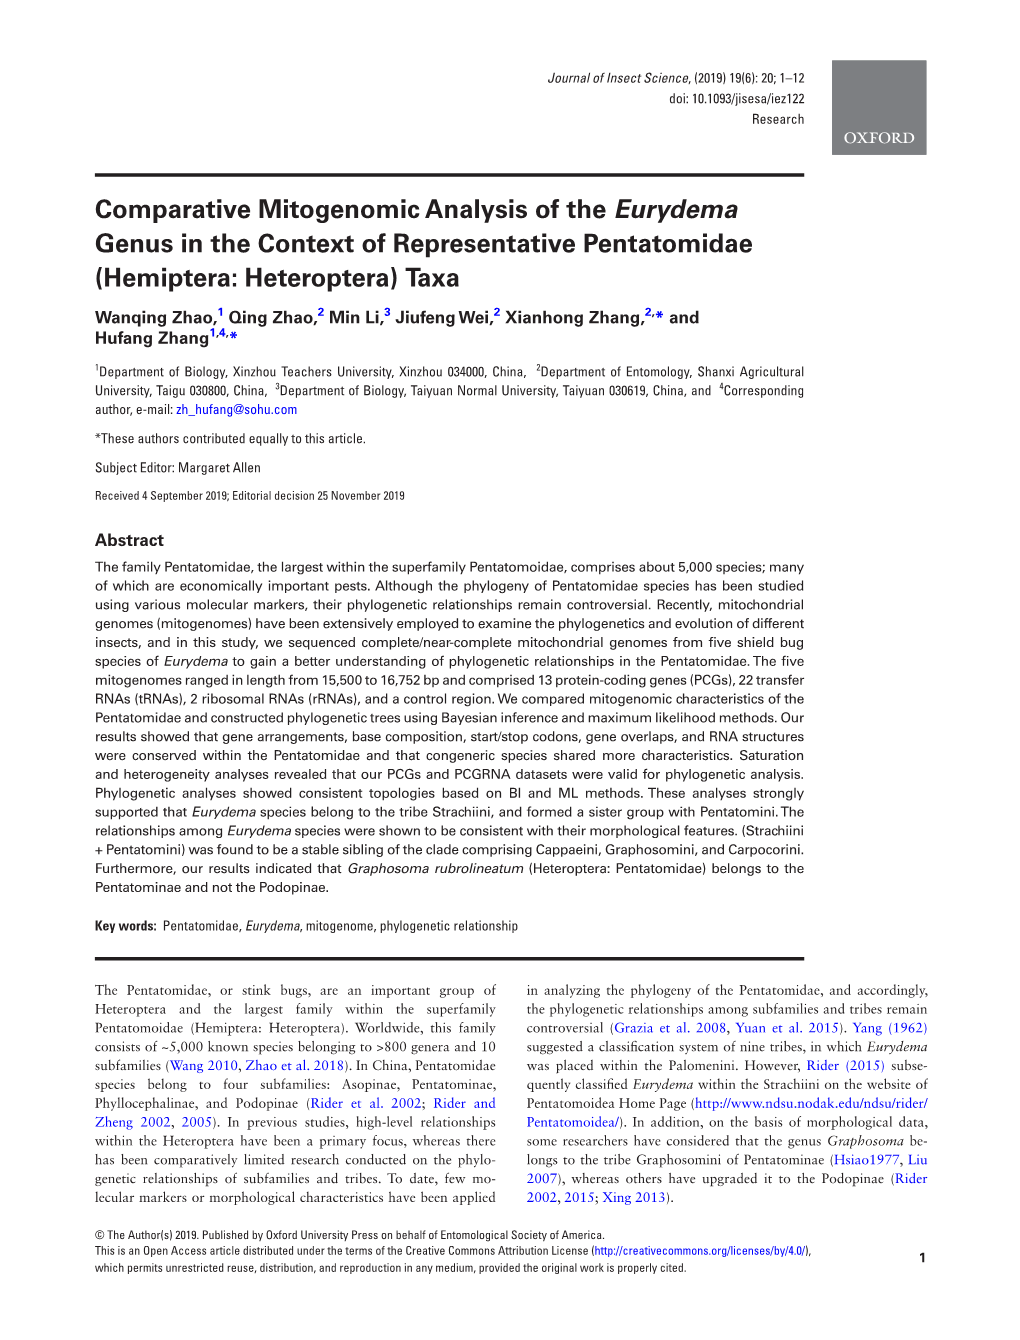 Comparative Mitogenomic Analysis of the Eurydema Genus in the Context of Representative Pentatomidae (Hemiptera: Heteroptera) Taxa